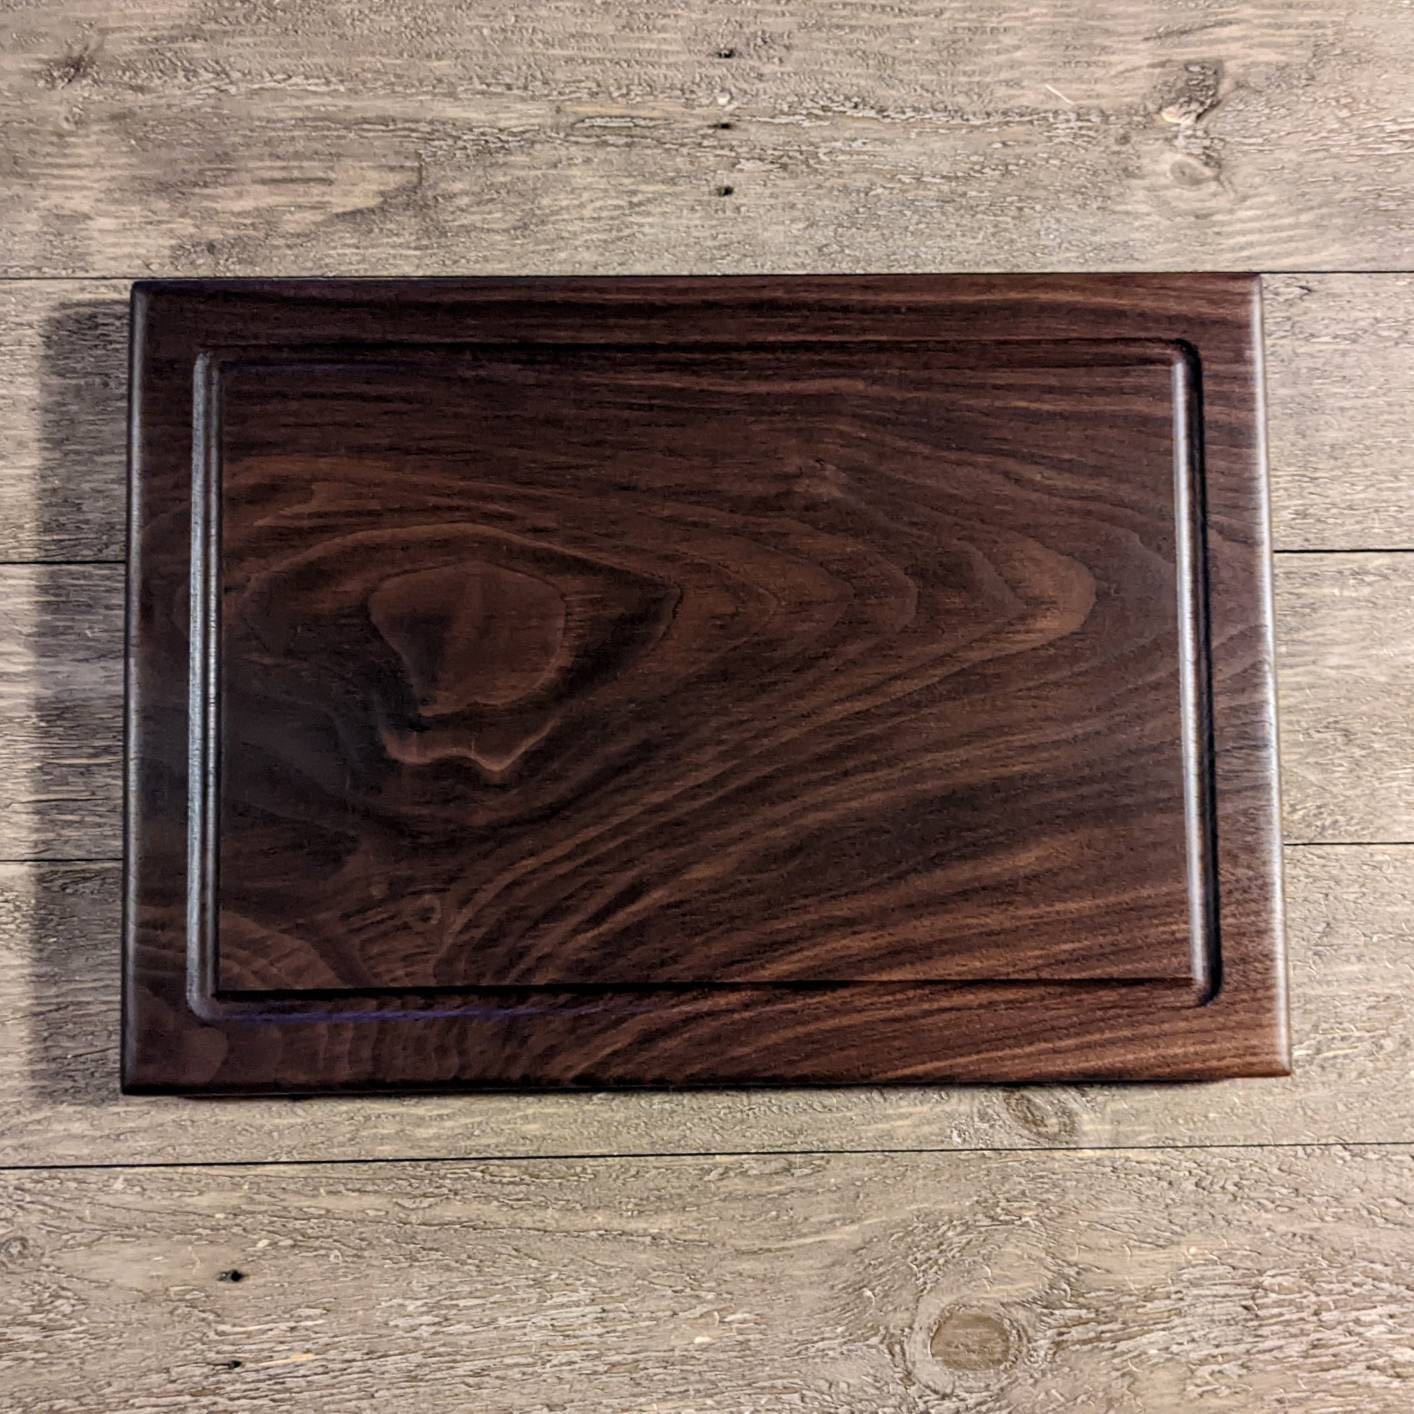 TeakCraft Walnut Cutting Board, Single Piece Wood, Chopping Board, Knife  Friendly, Reversible, Cheese Board, The Opus (22x11x1inch)